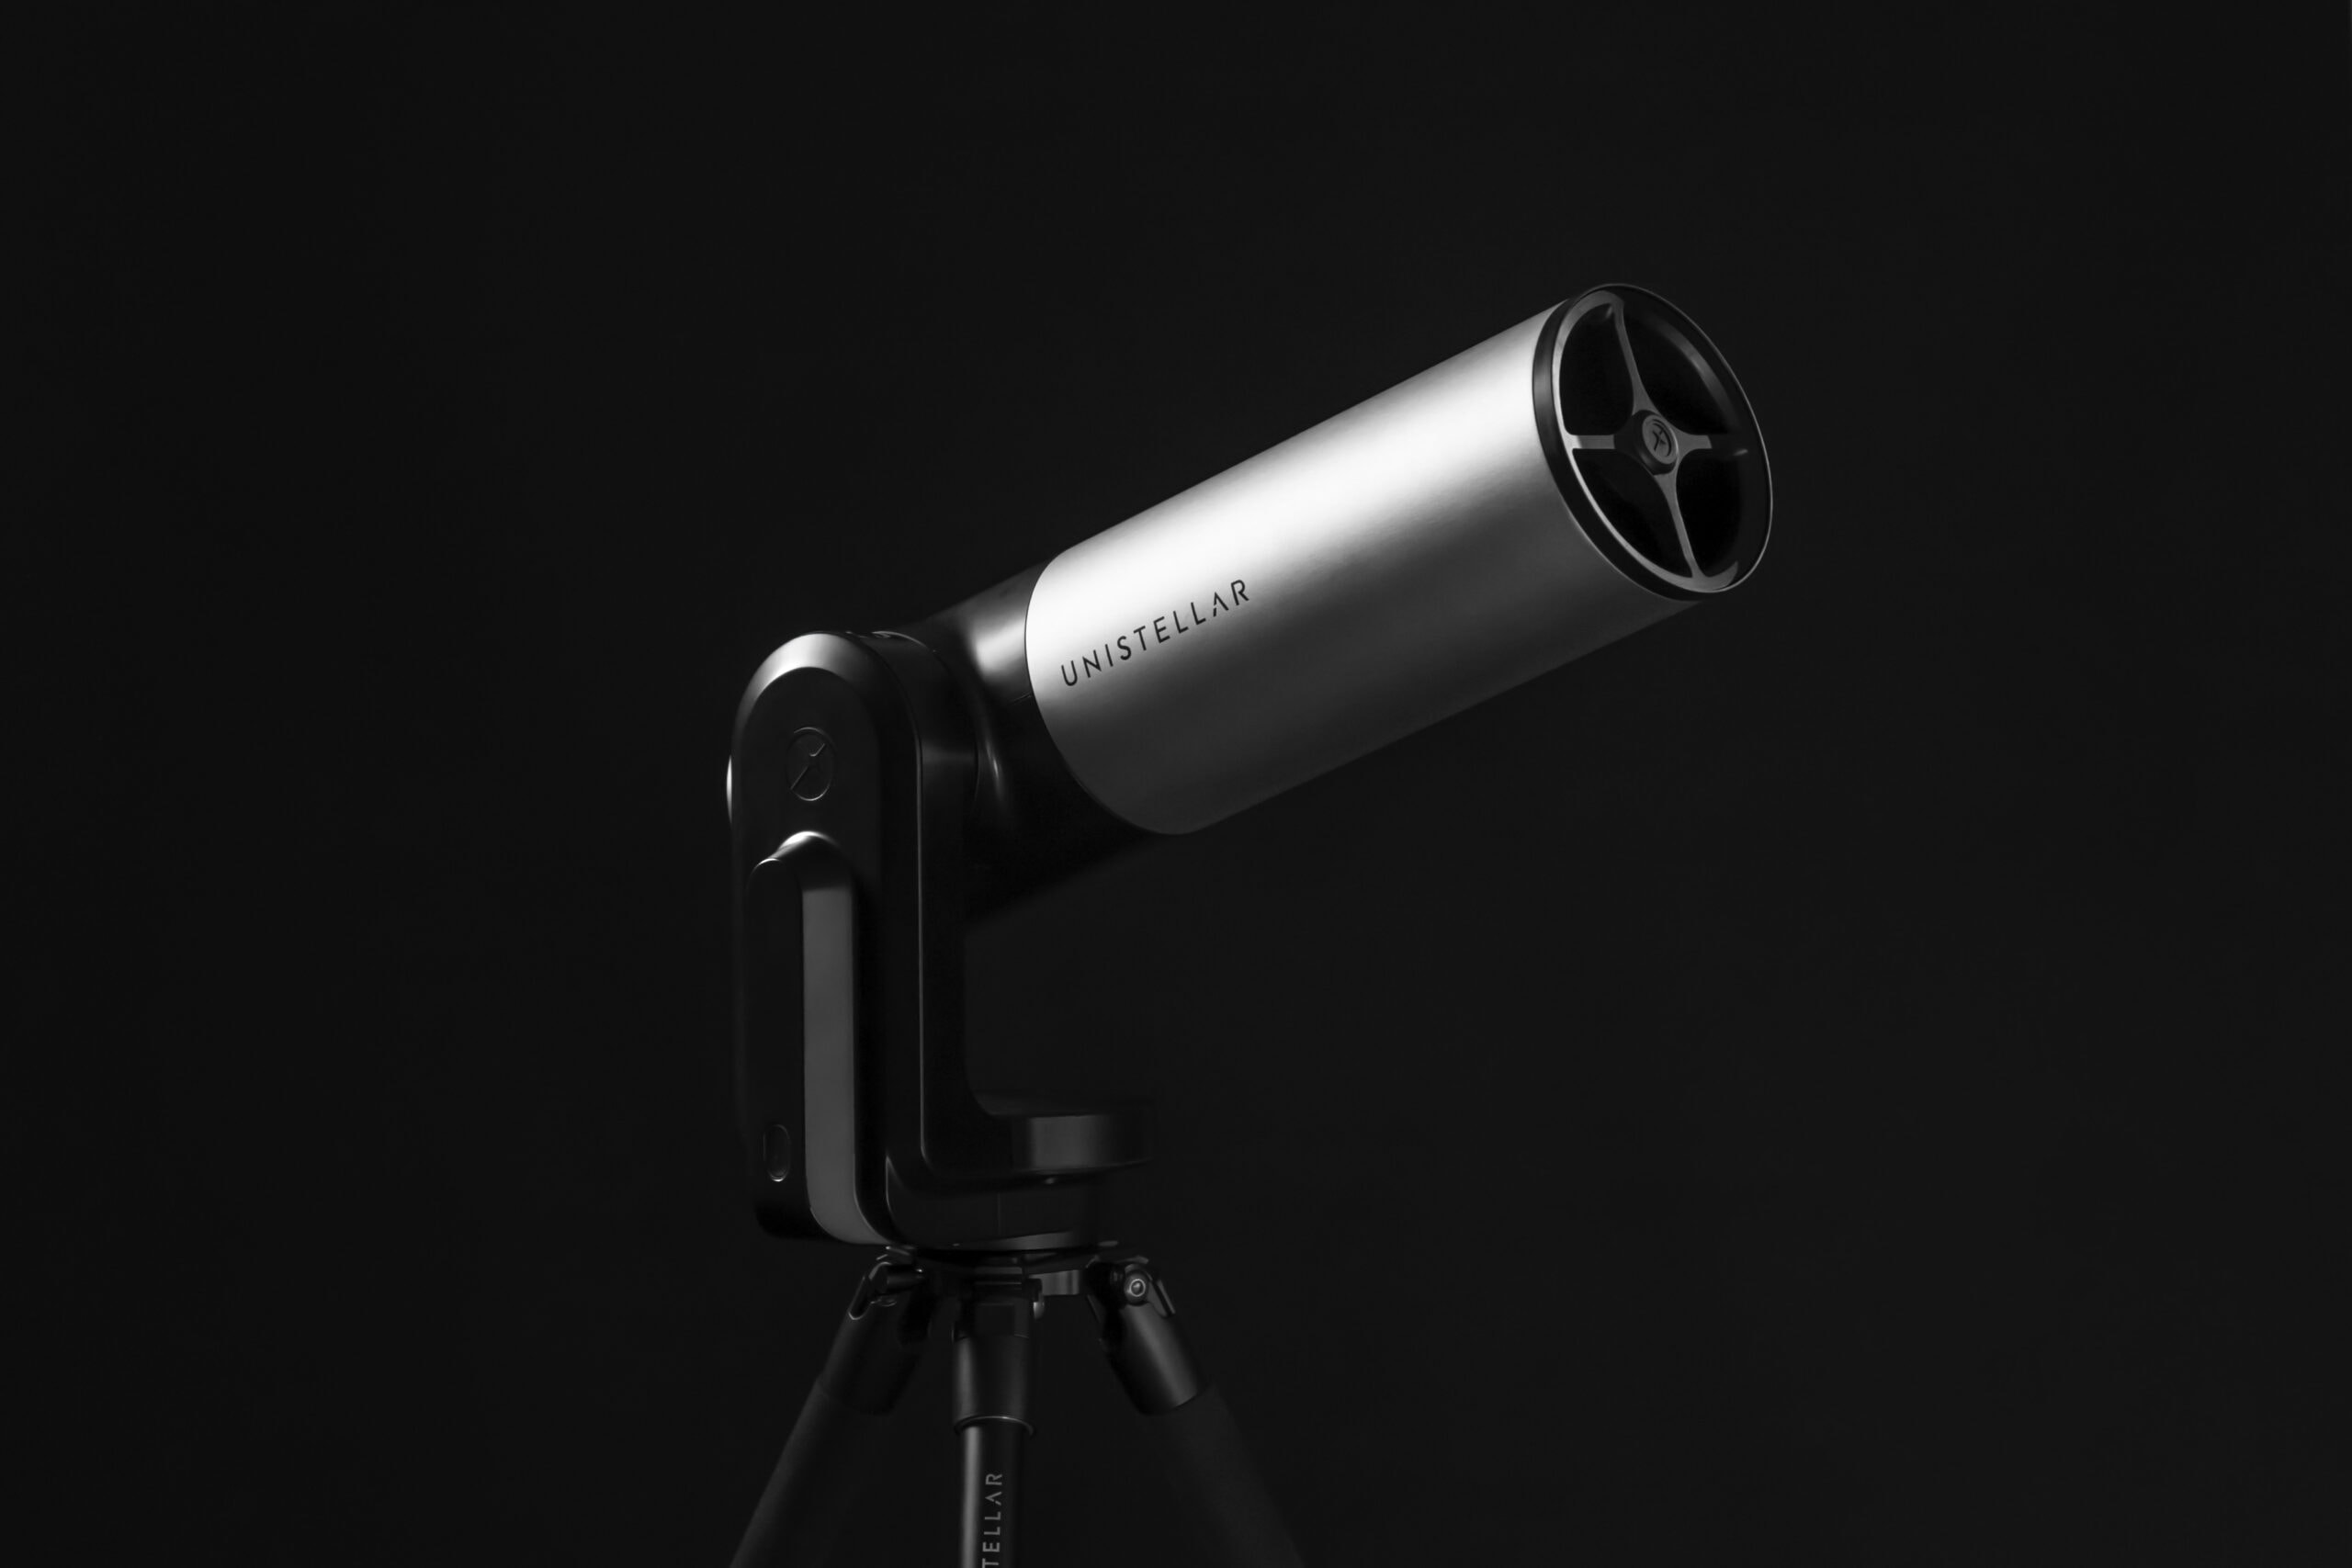 Unistellar eVscope Review – My Honest Opinion